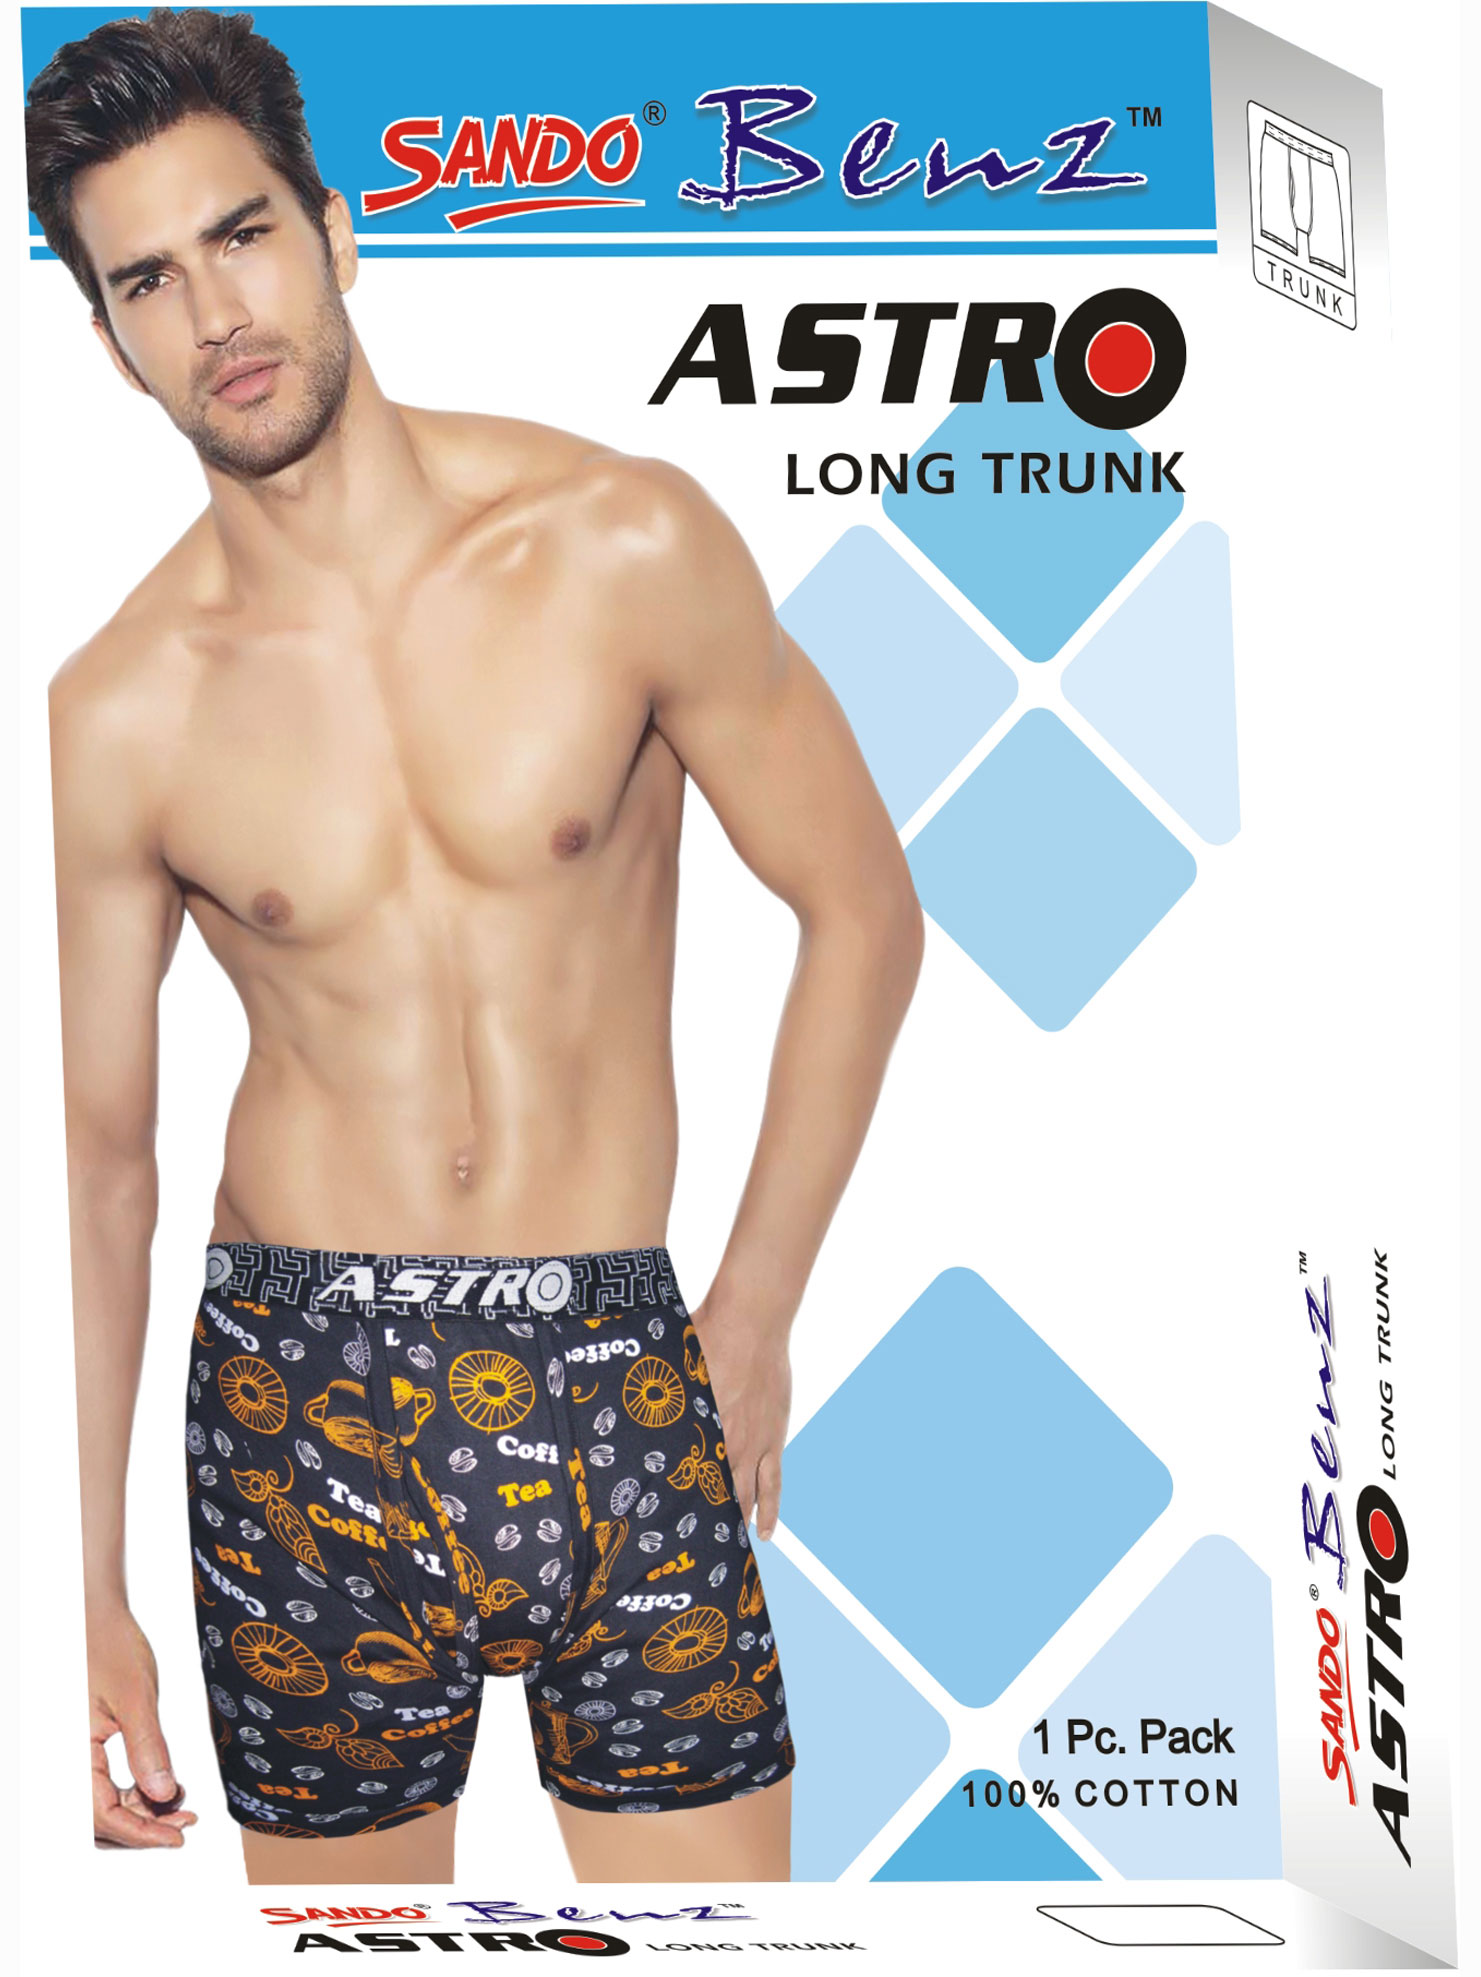 astro-long-trunkoe-3474fb20-sando benz astro printed long trunk.jpg0